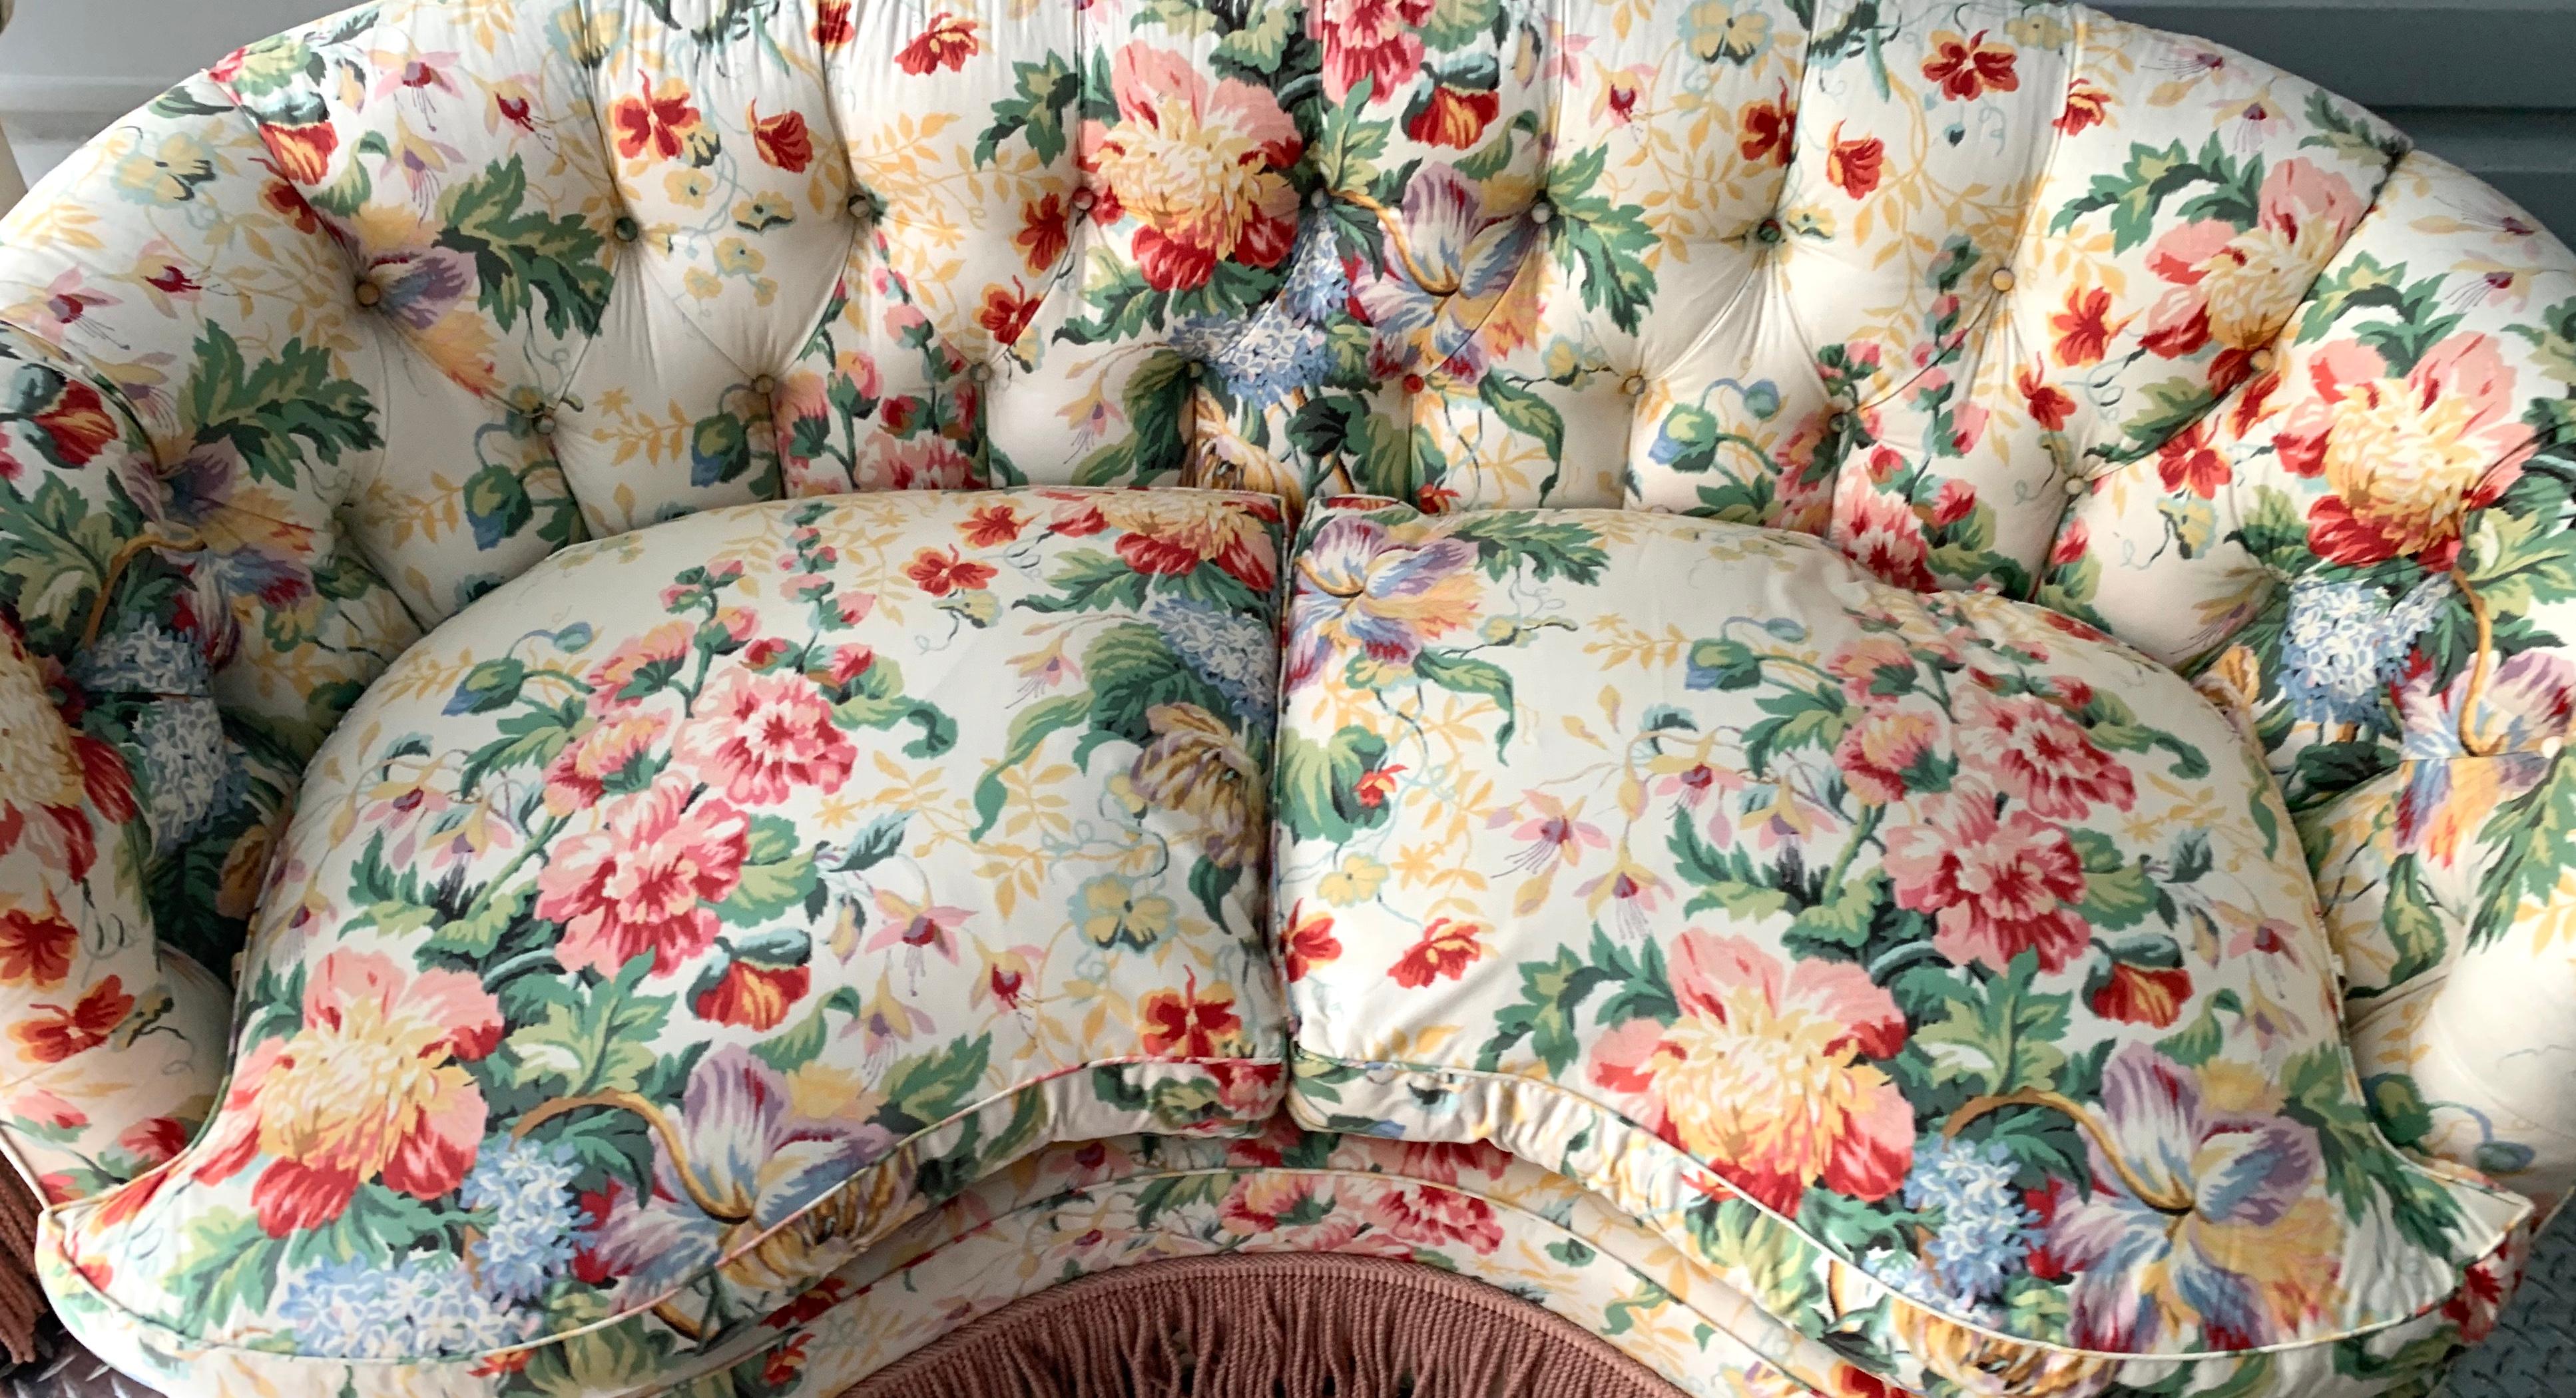 Hollywood Regency custom floral living room set, settee and slipper chair, sofa (2-seat). Dimensions: Sofa 68” x 36” x 30.5” H, slipper chair 20” W x 28” D x 30.5” H.